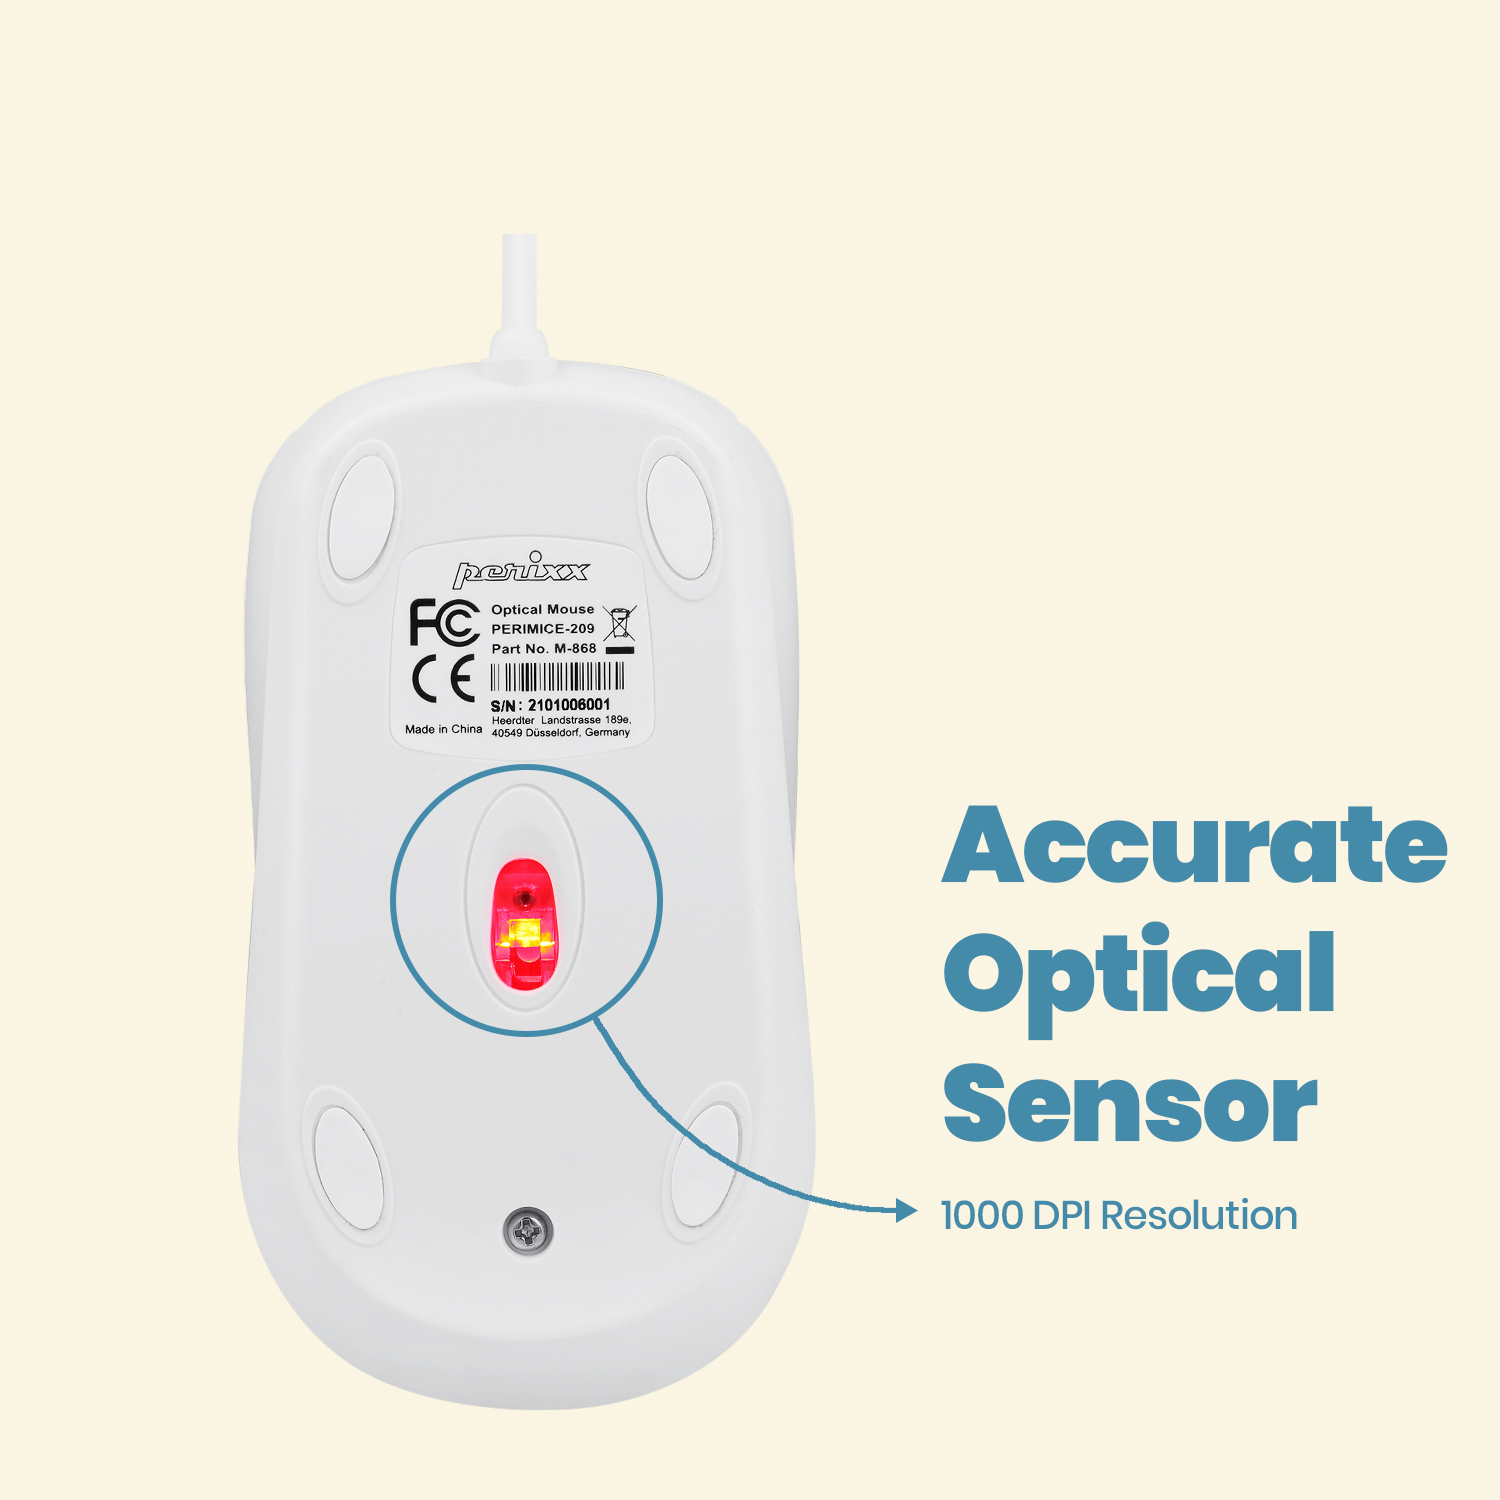  Accurate Optical Sensor